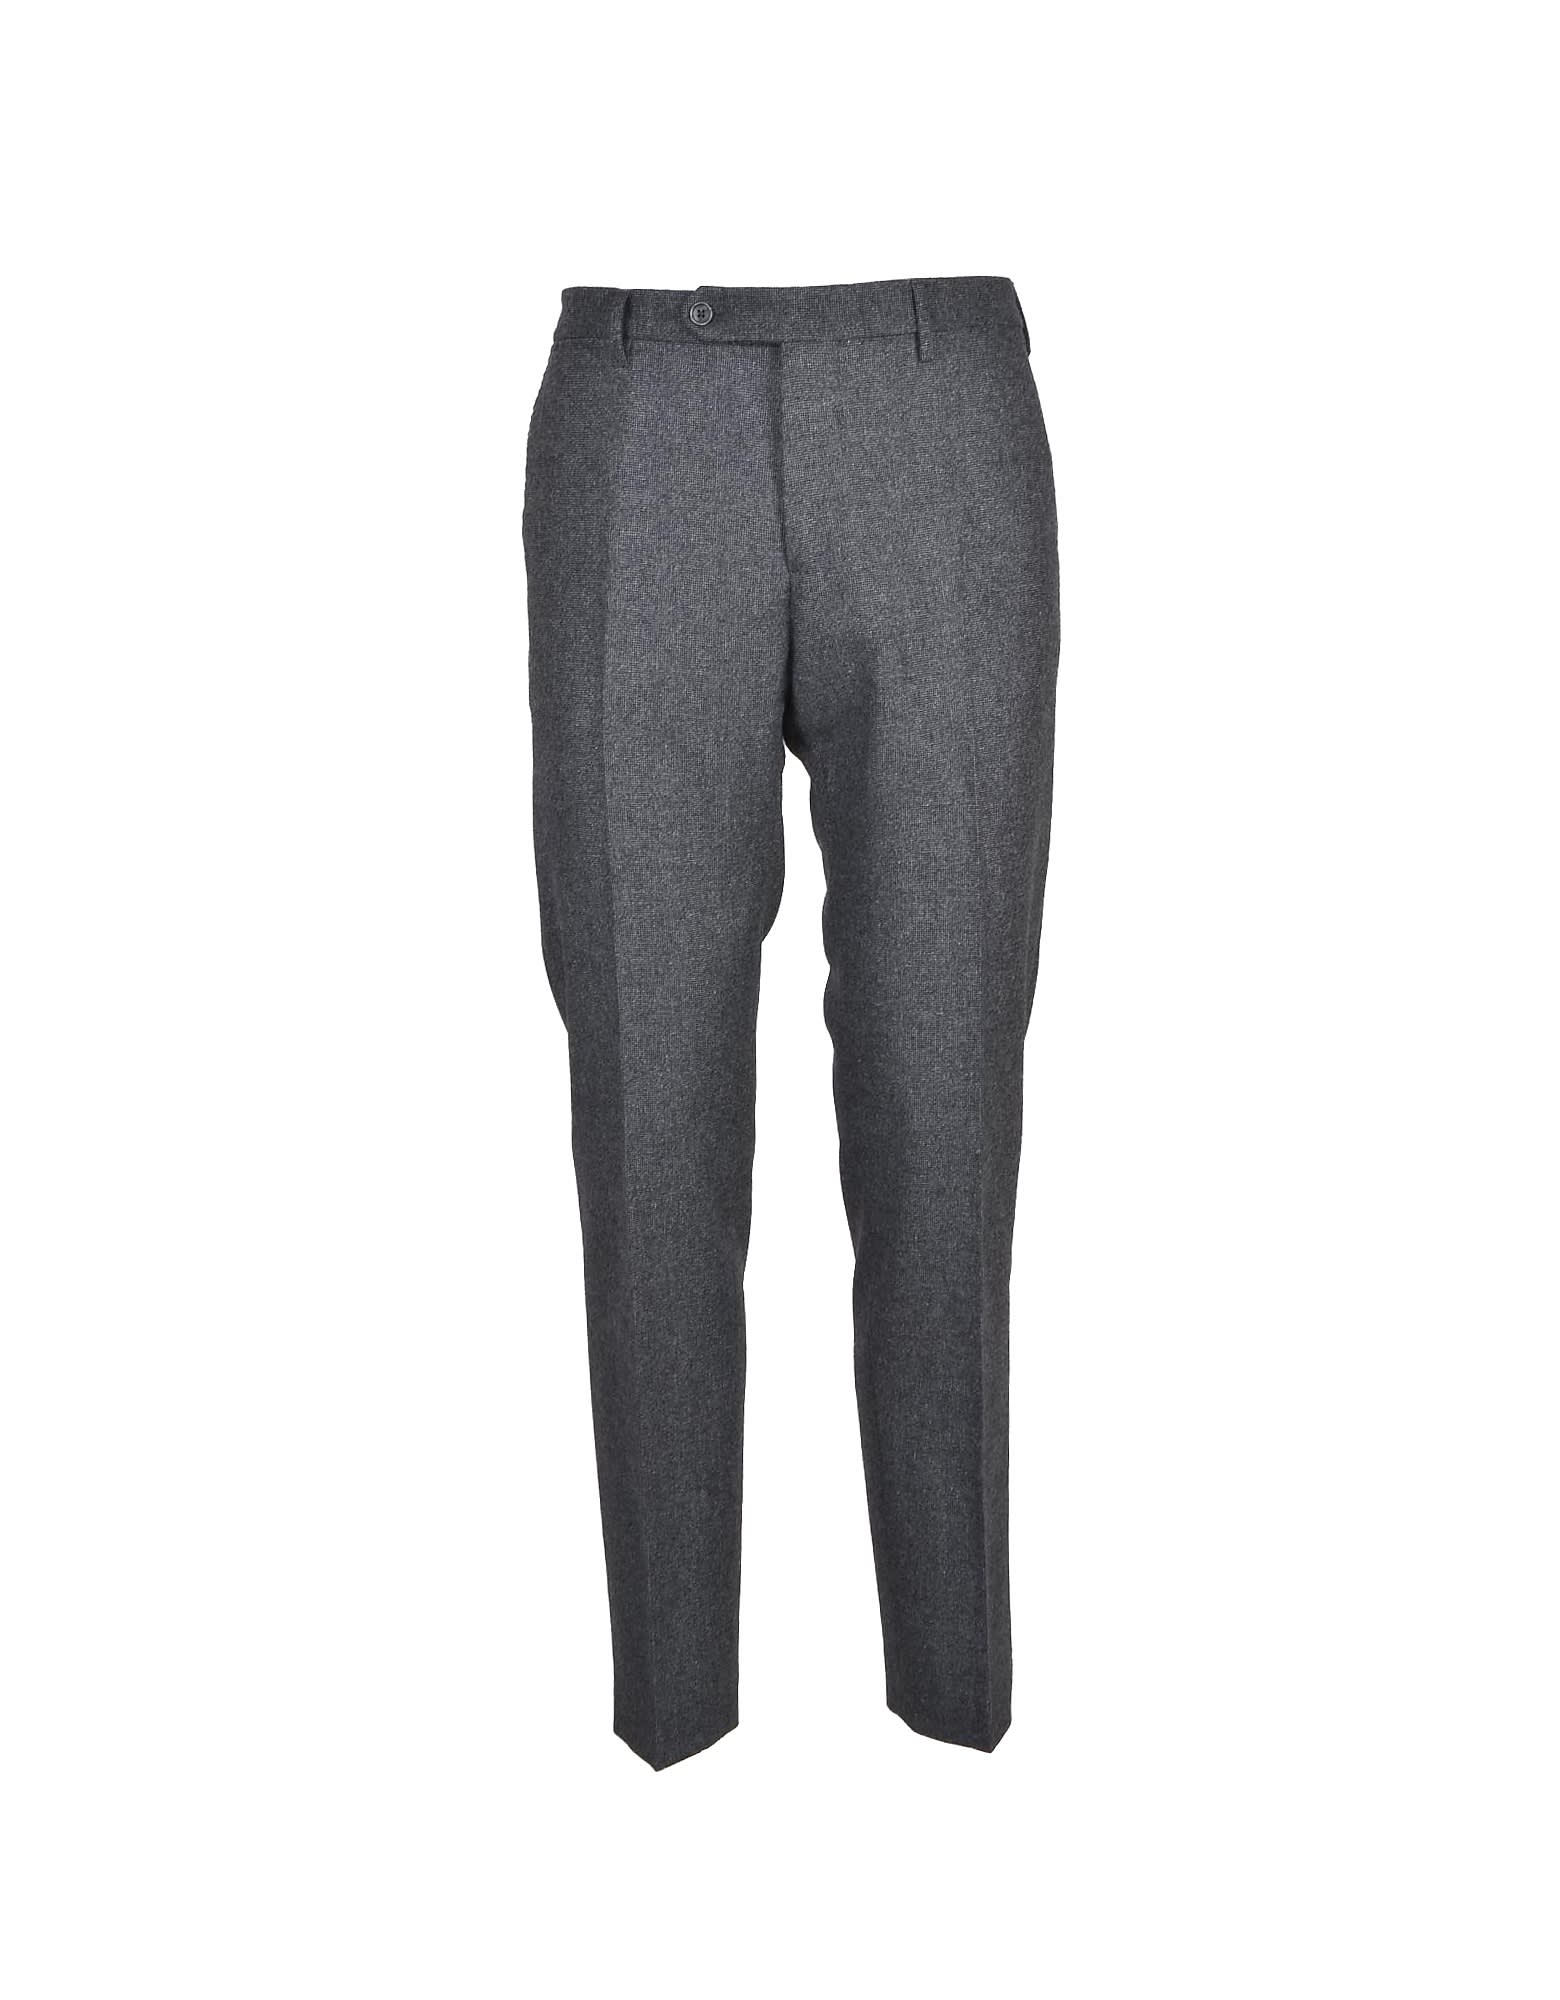 Berwich Mens Gray Pants